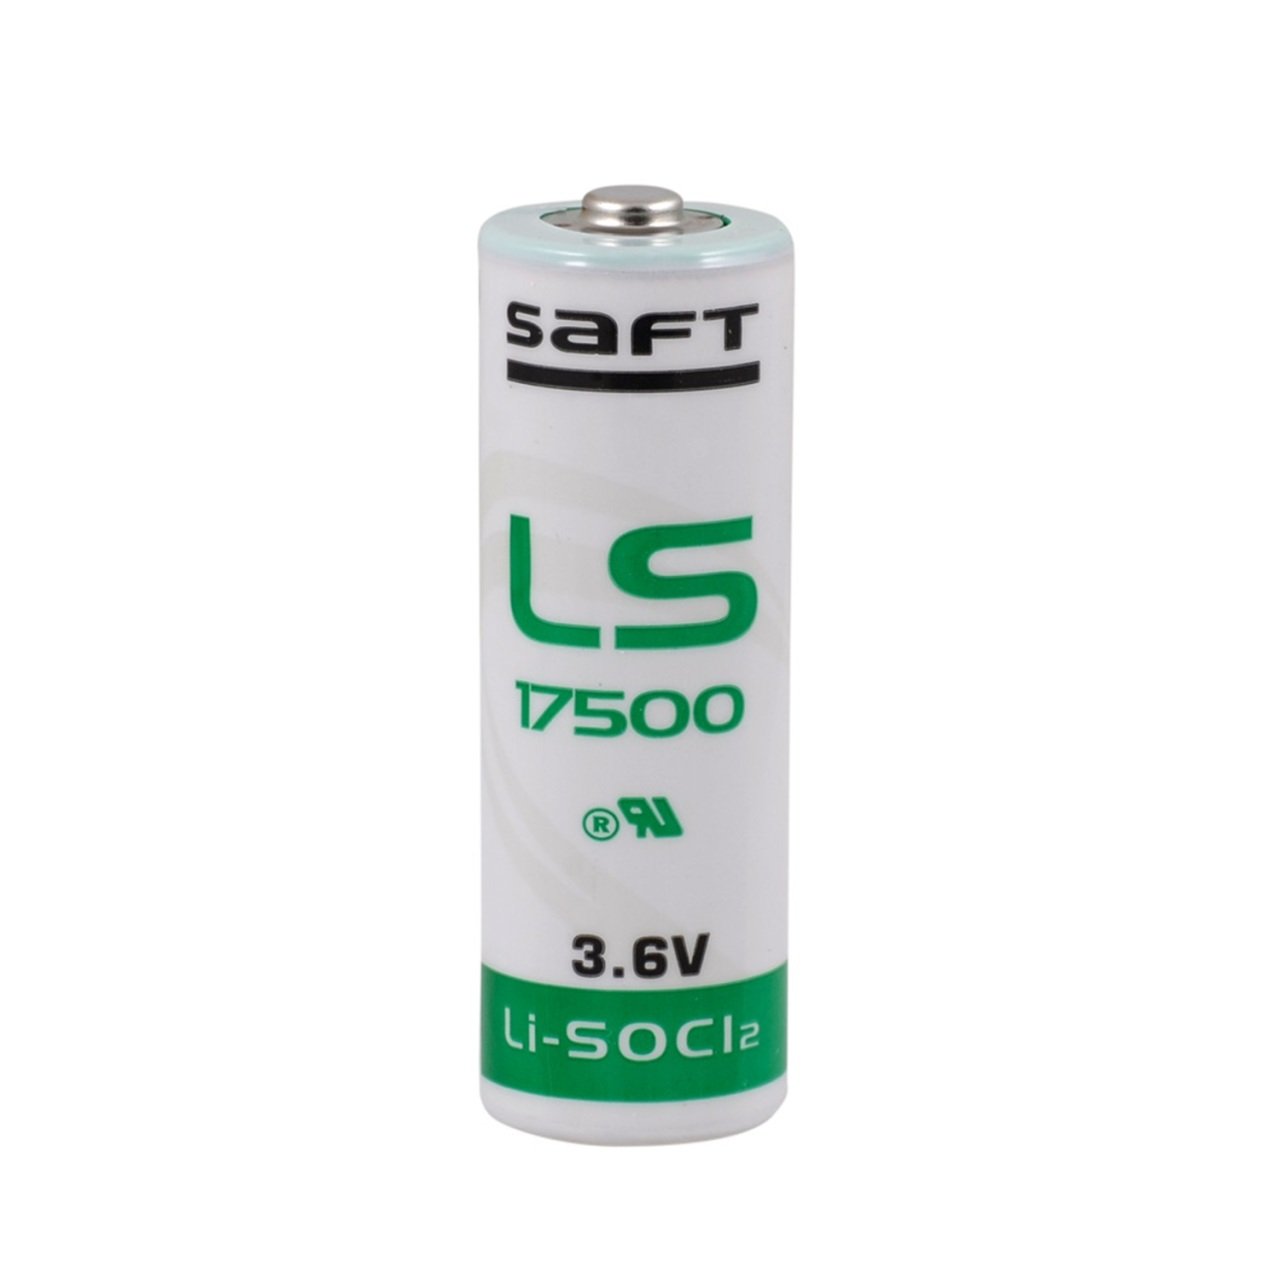 Saft LS17500 3.6V A Size Lityum Pil